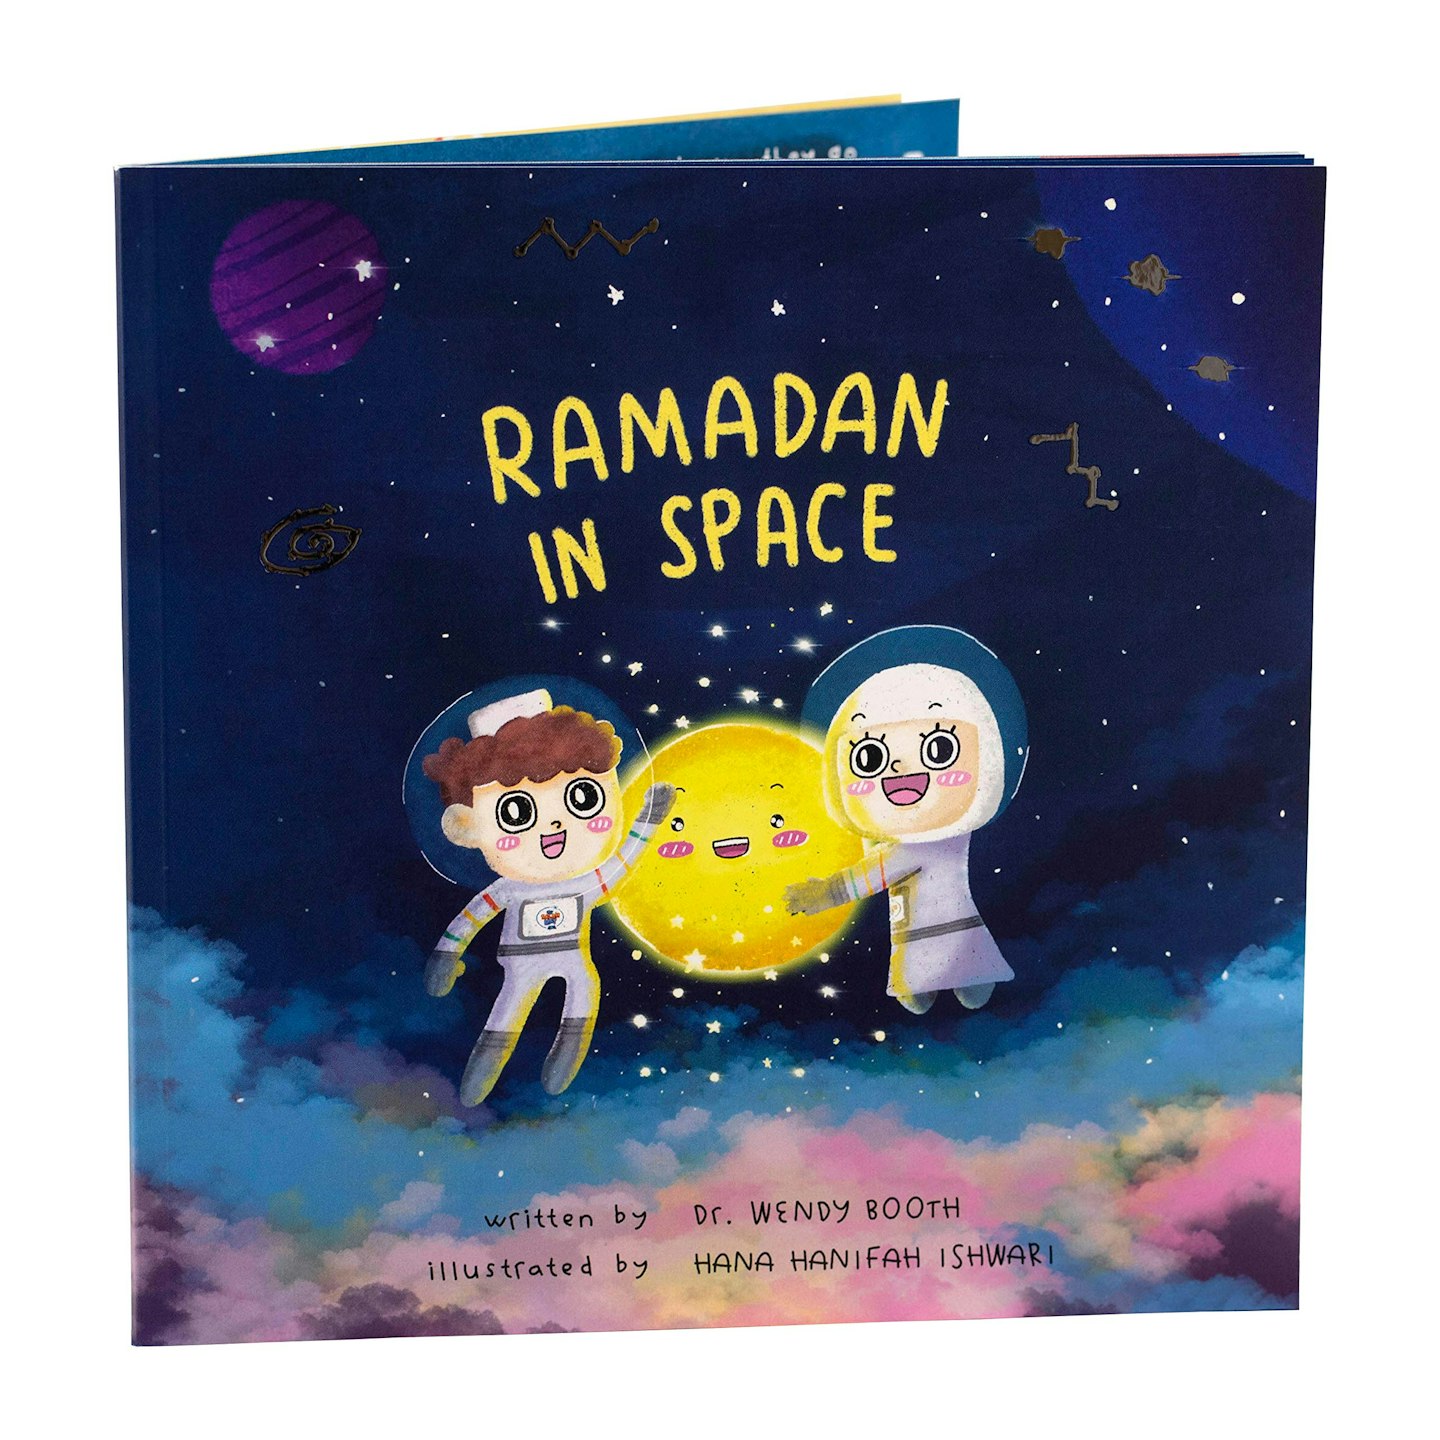 Ramadan in Space by Dr Wendy Booth and Hana Hanifah Ishwari